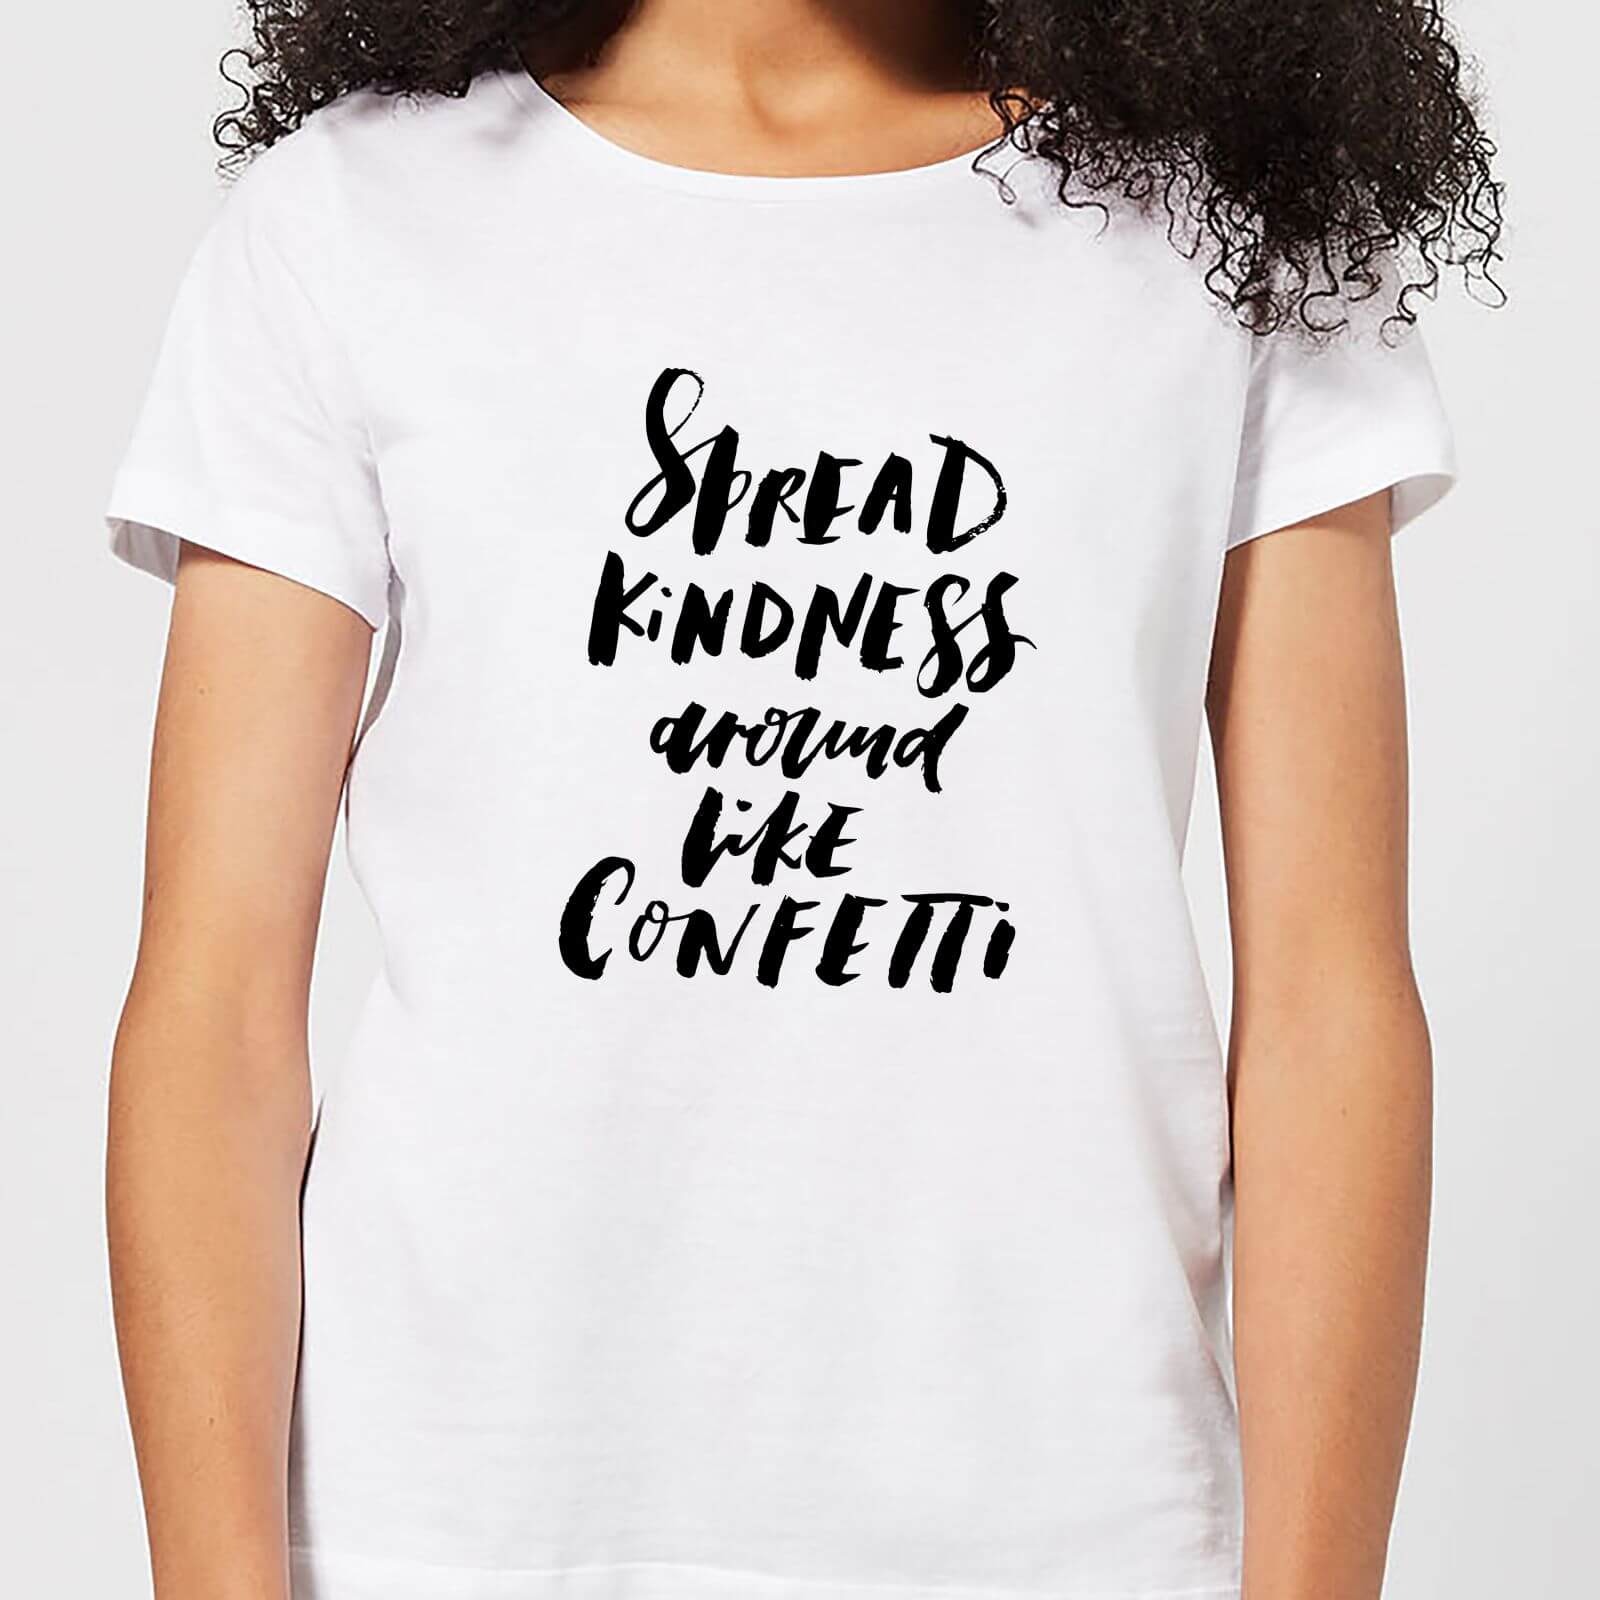 Spread Kindness Around Like Confetti Women's T-Shirt - White - M - White